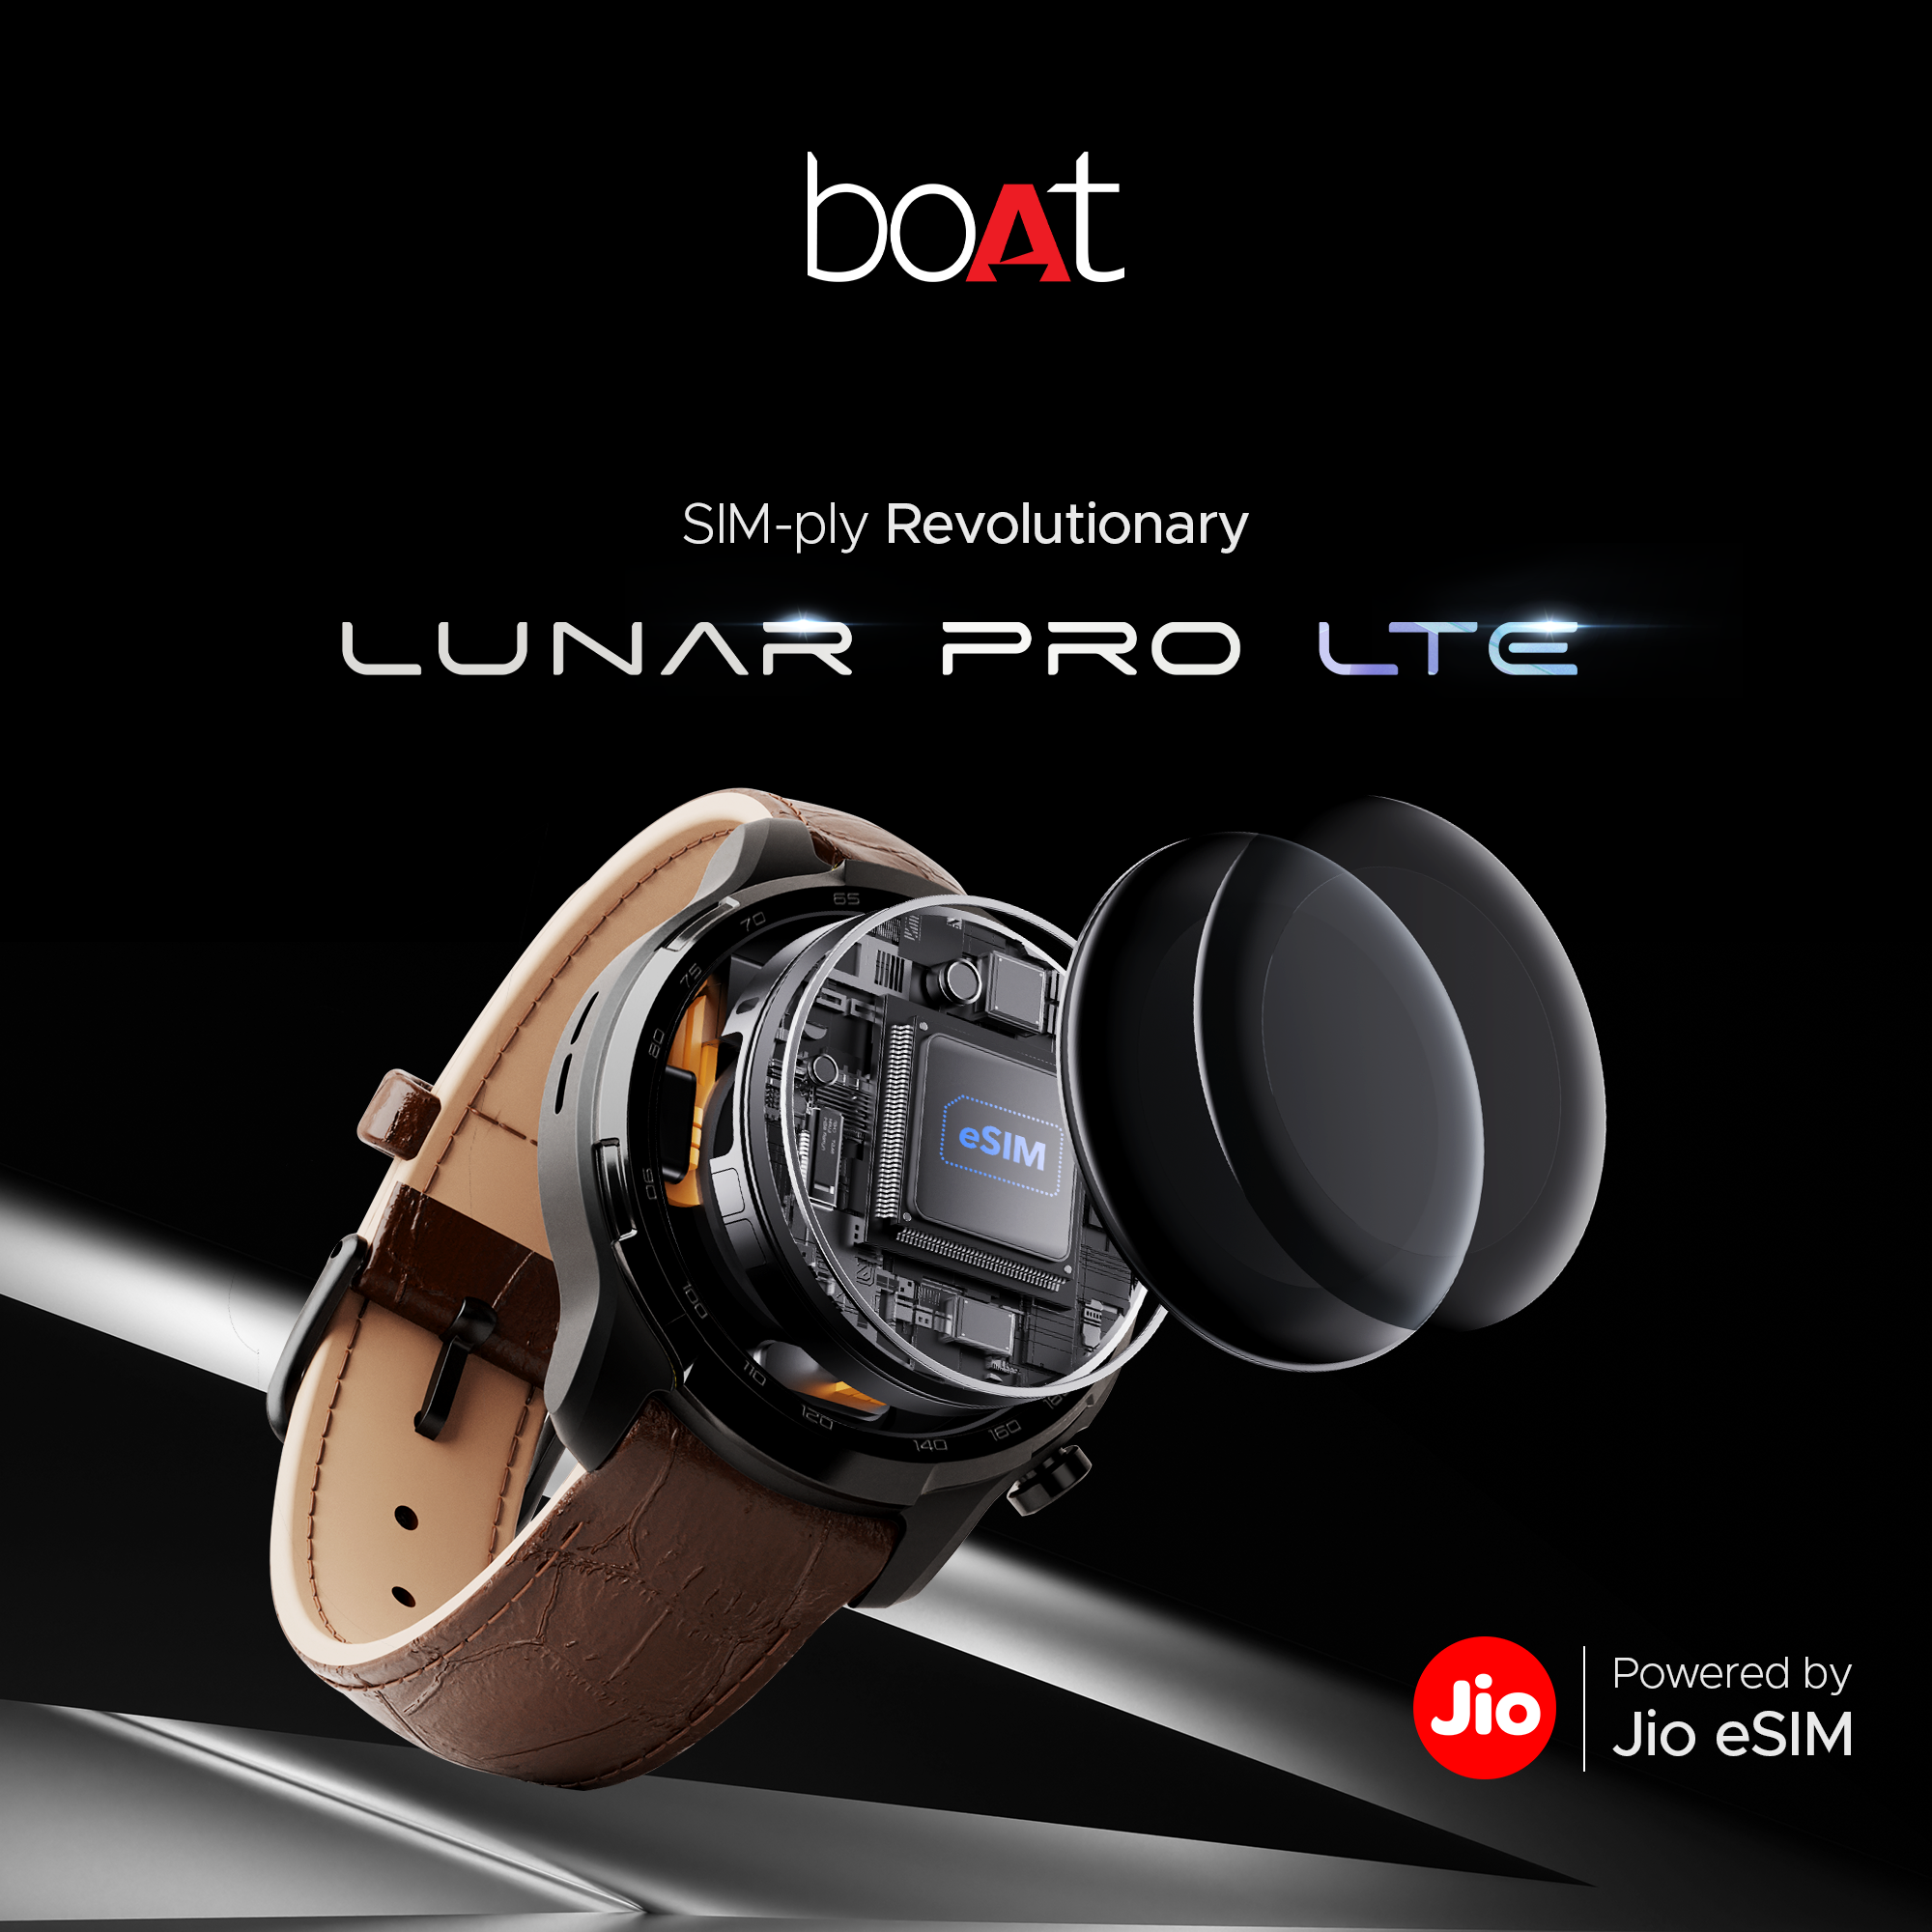 boAt Lunar Pro LTE: Key Specifications